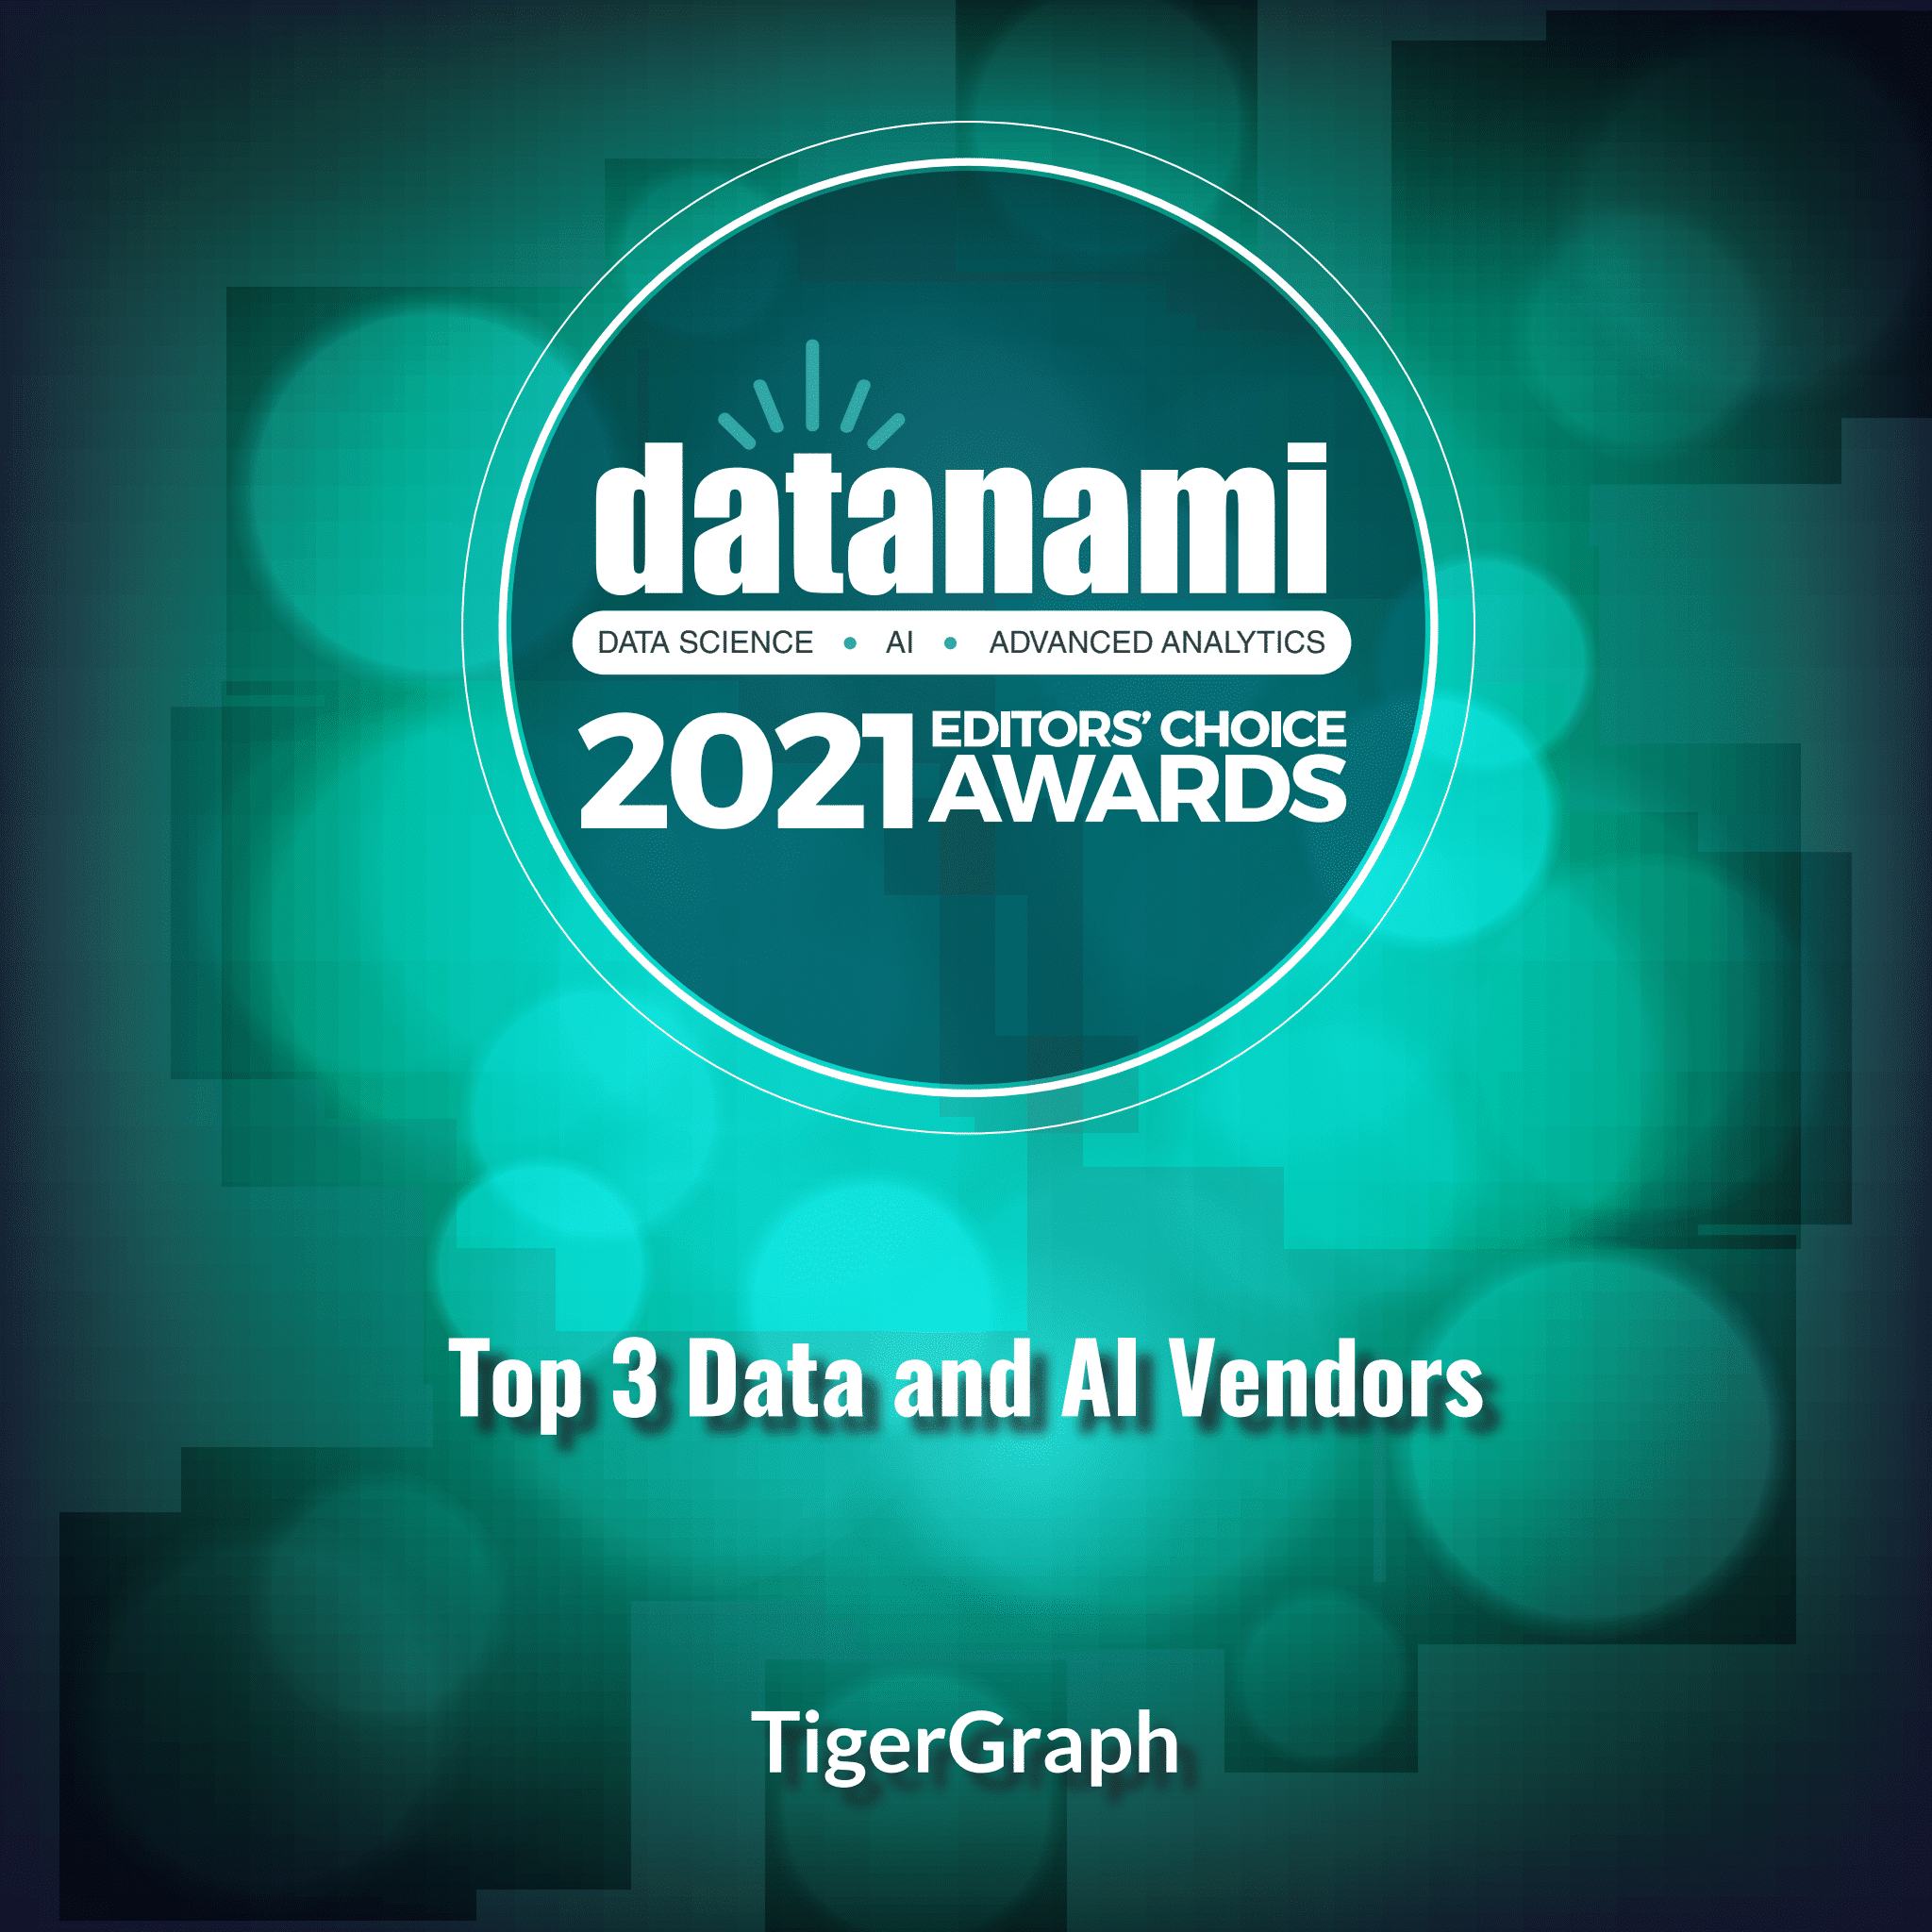 Datanami Awards